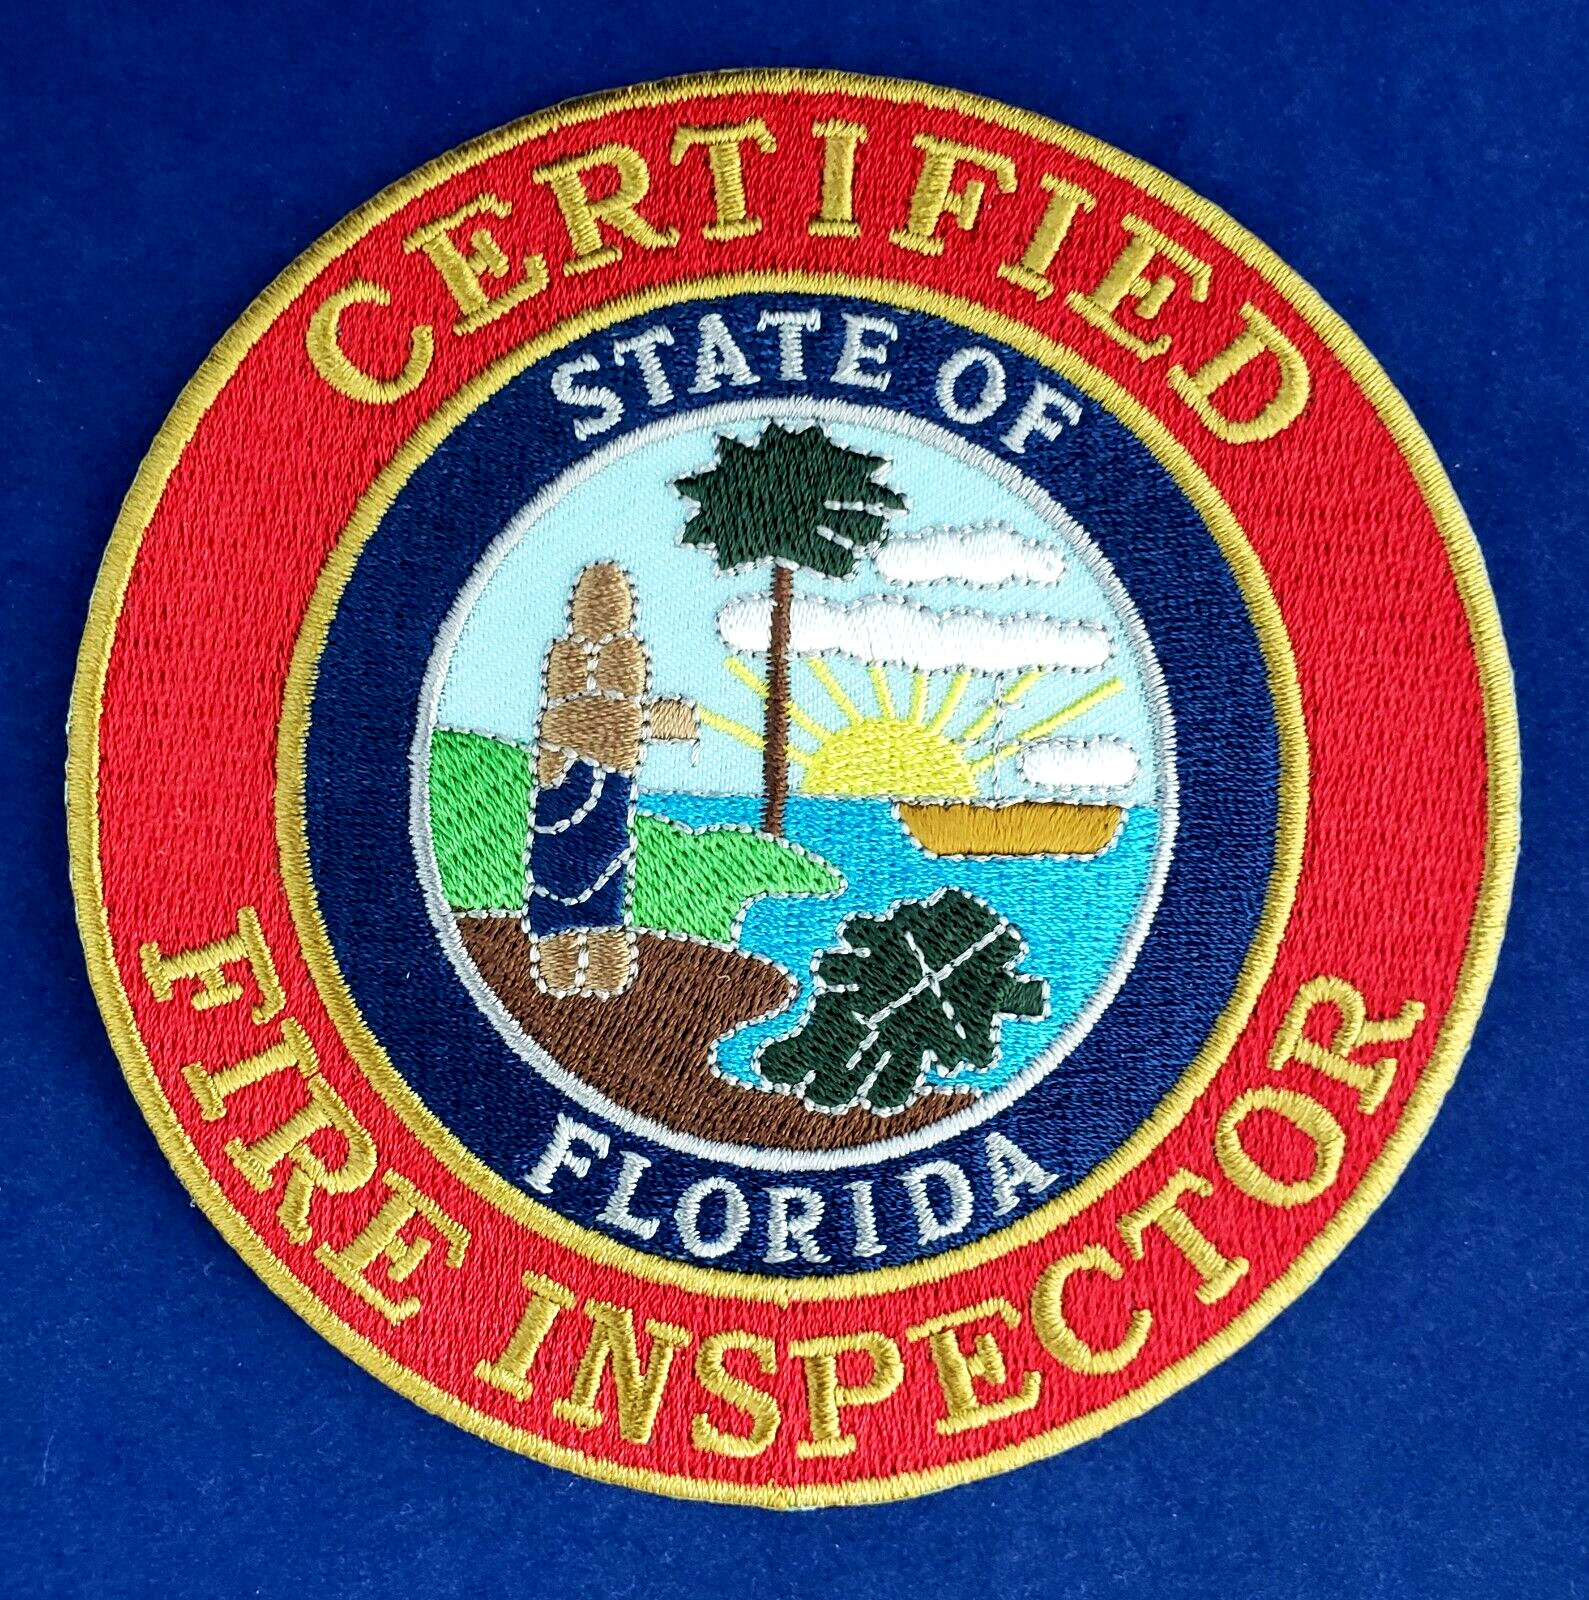 FLORIDA CERTIFIED FIRE INSPECTOR PATCH Item#2002